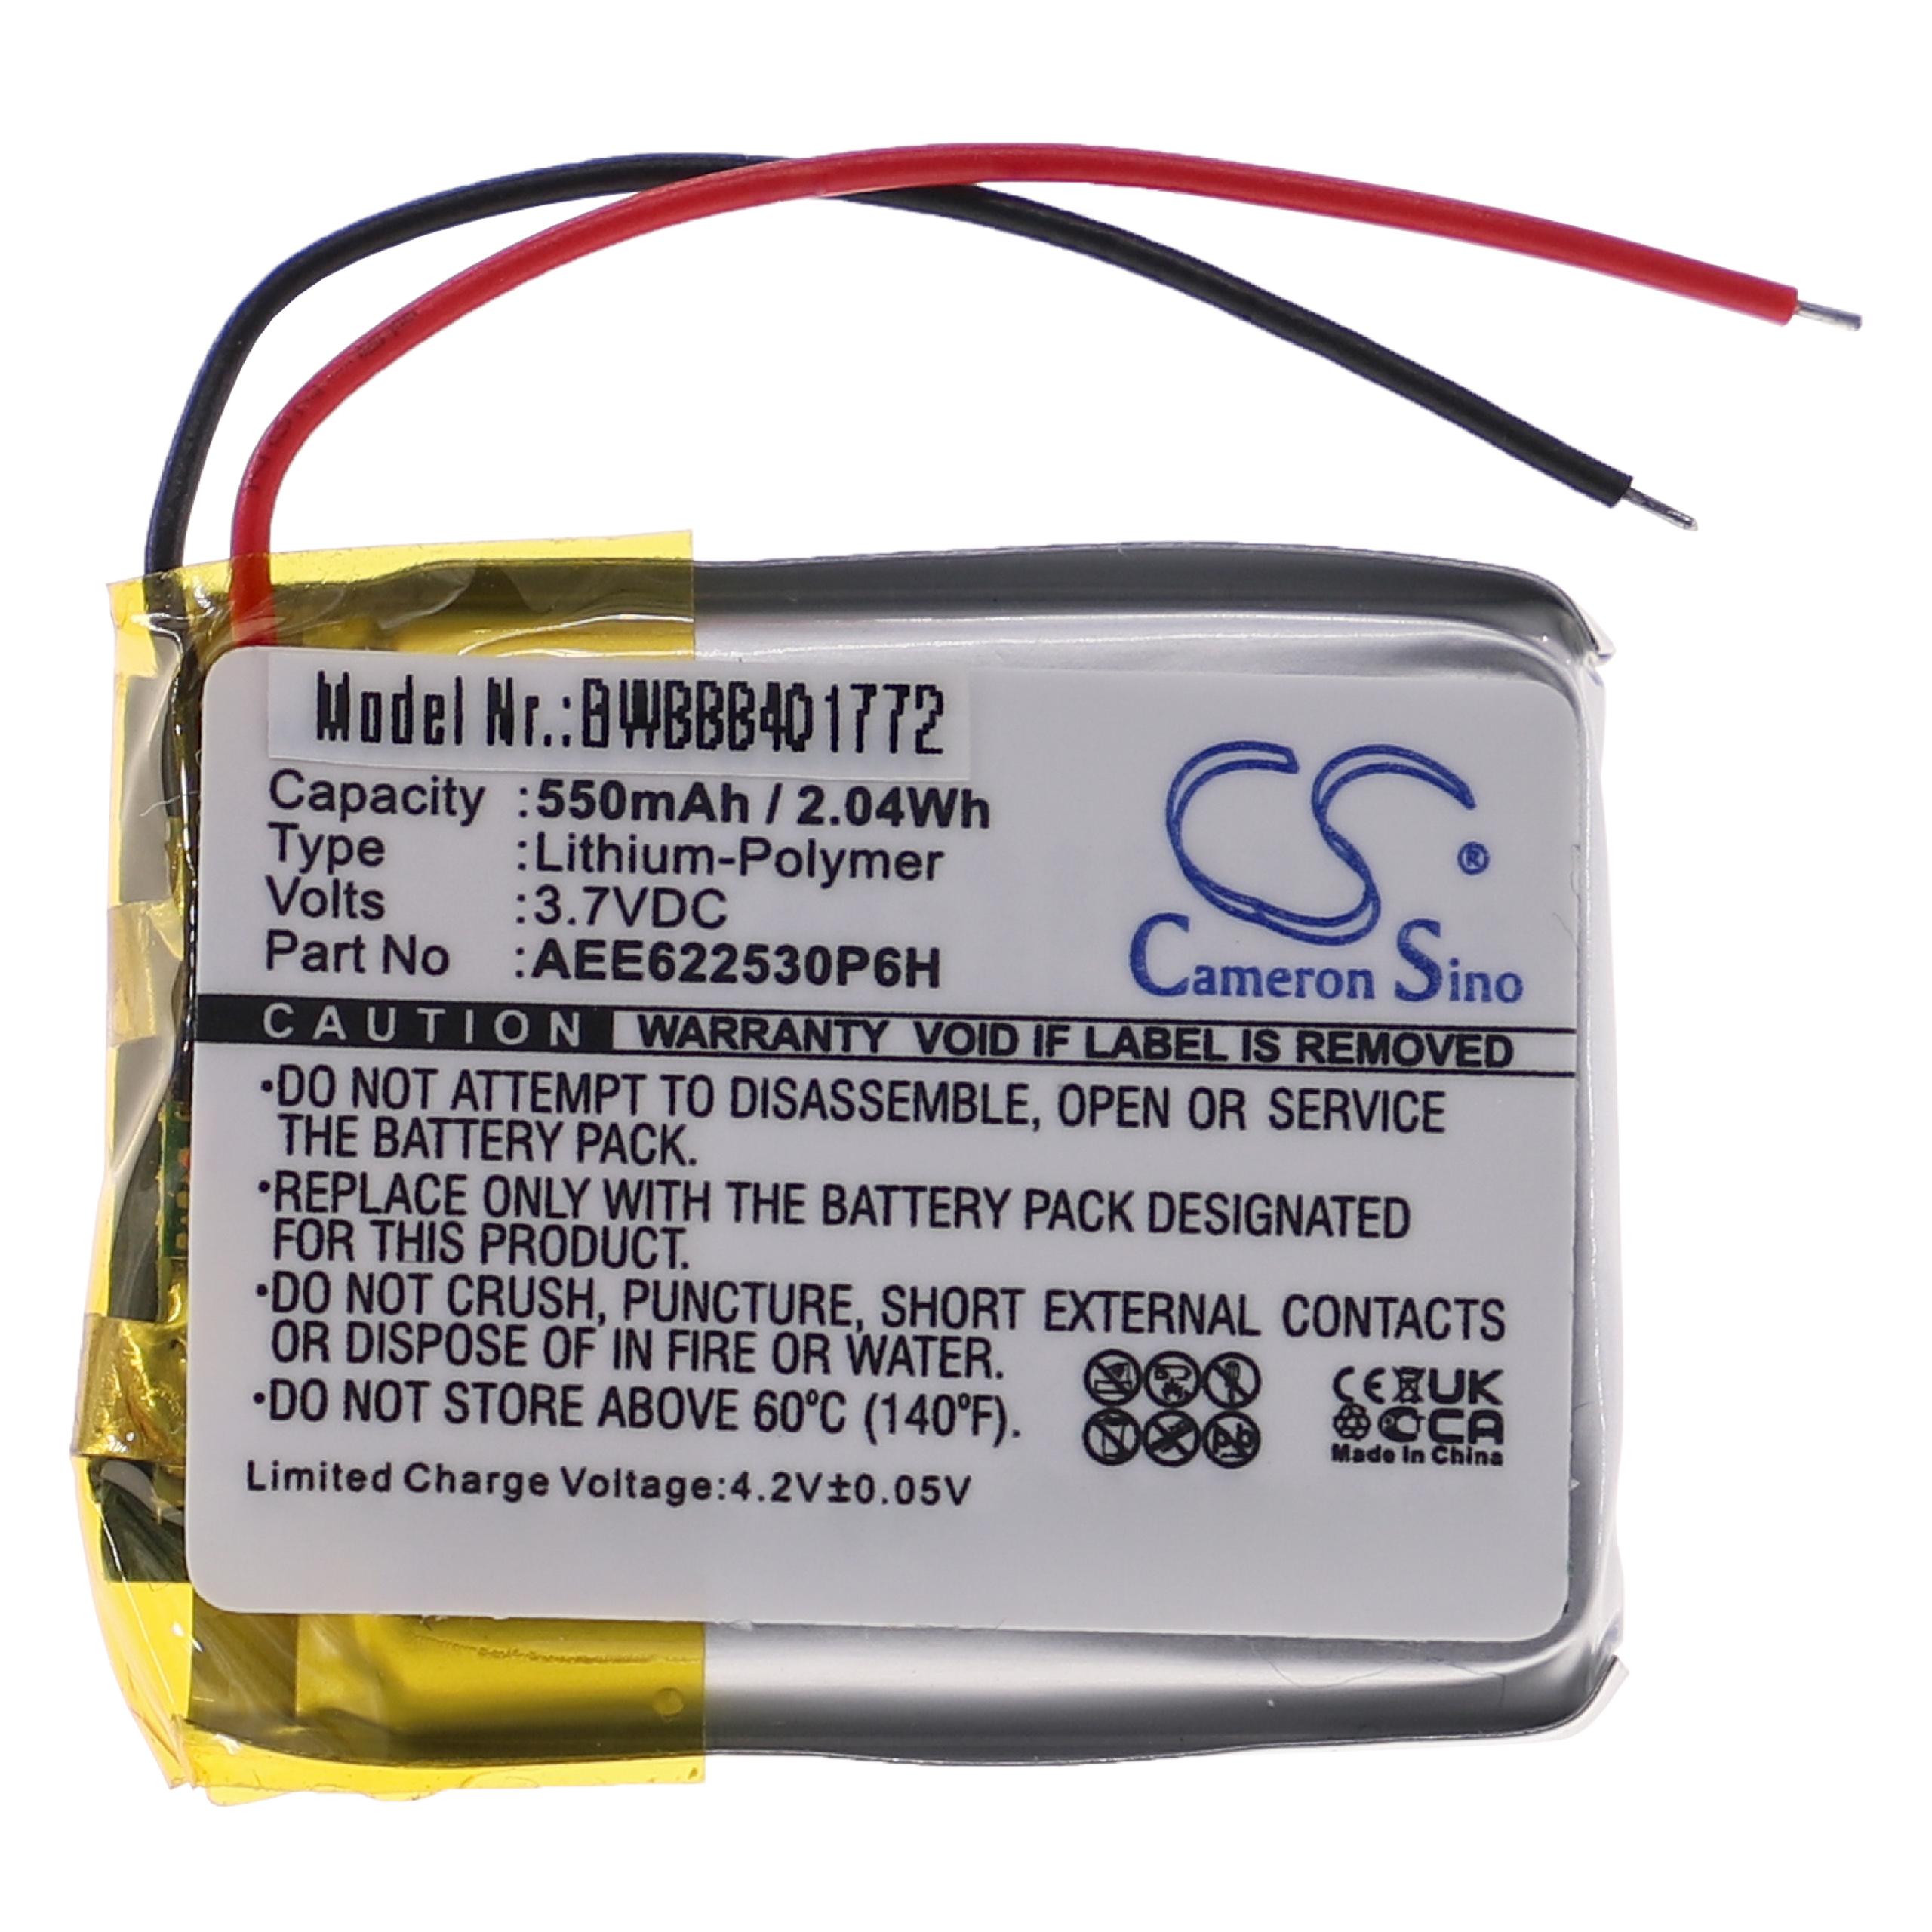 Smartwatch Battery Replacement for Golf Buddy AEE622530P6H - 550mAh 3.7V Li-polymer